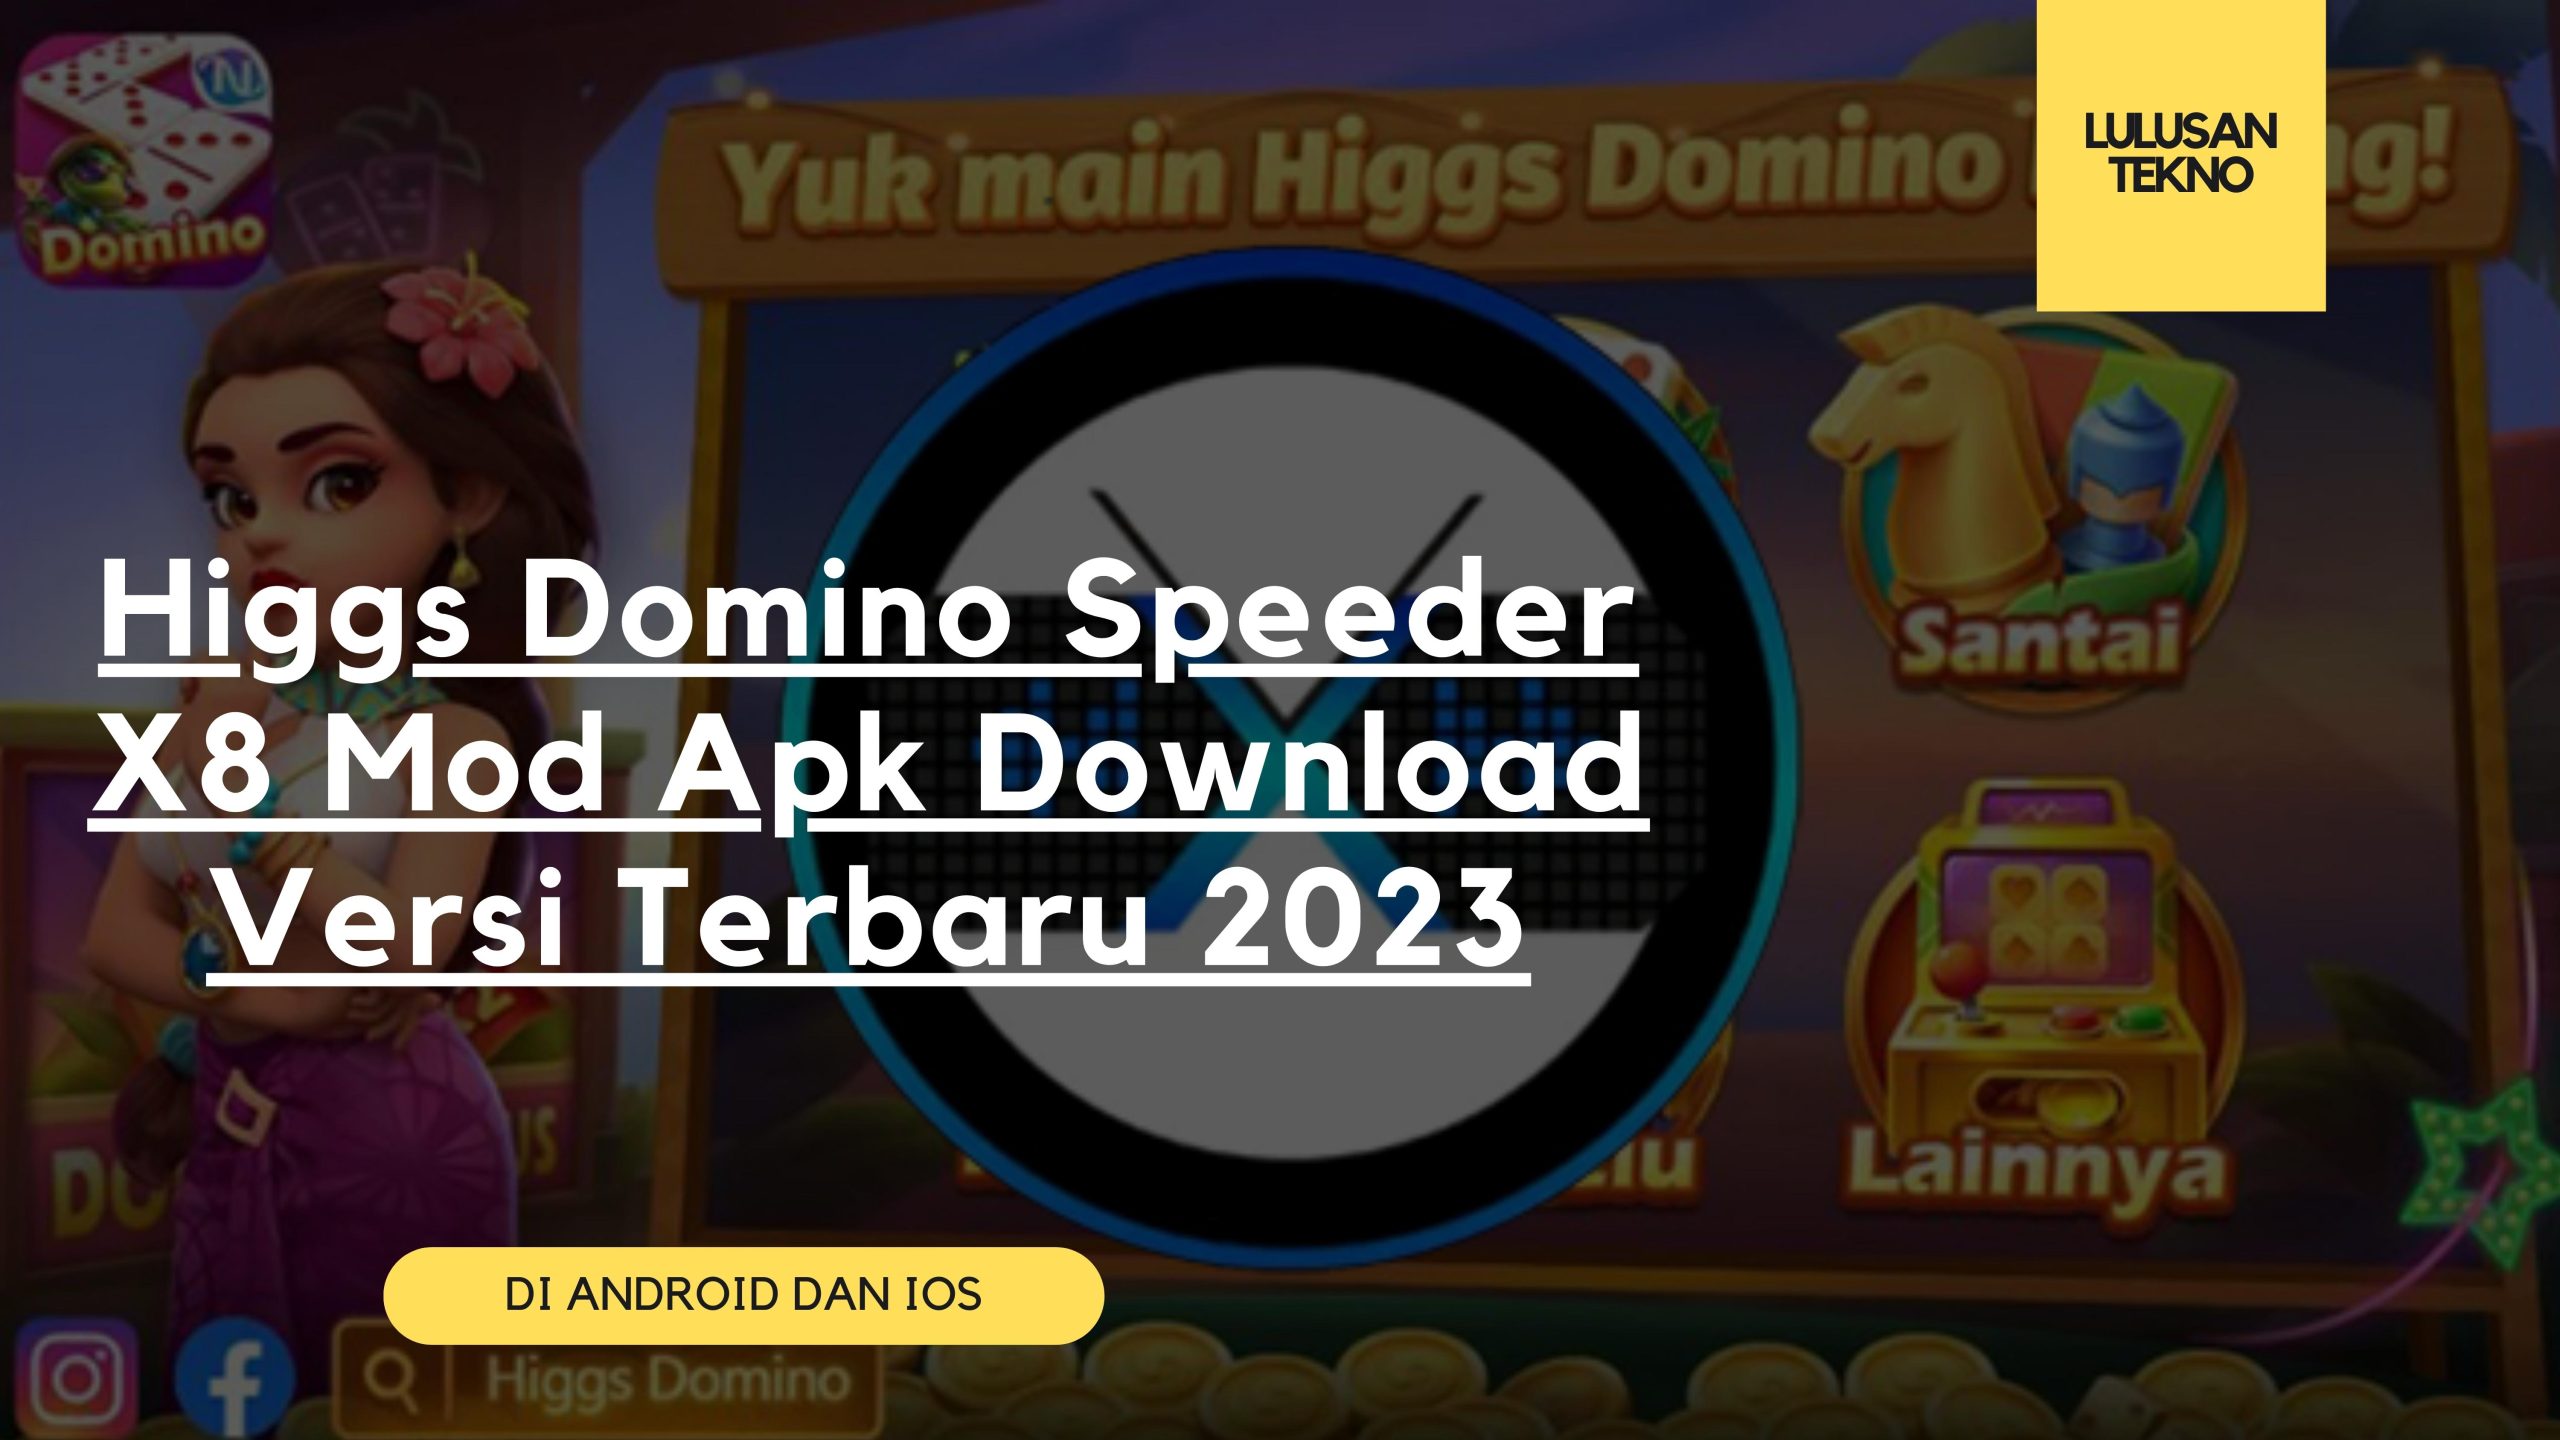 Higgs Domino Speeder X8 Mod Apk Download Versi Terbaru 2023